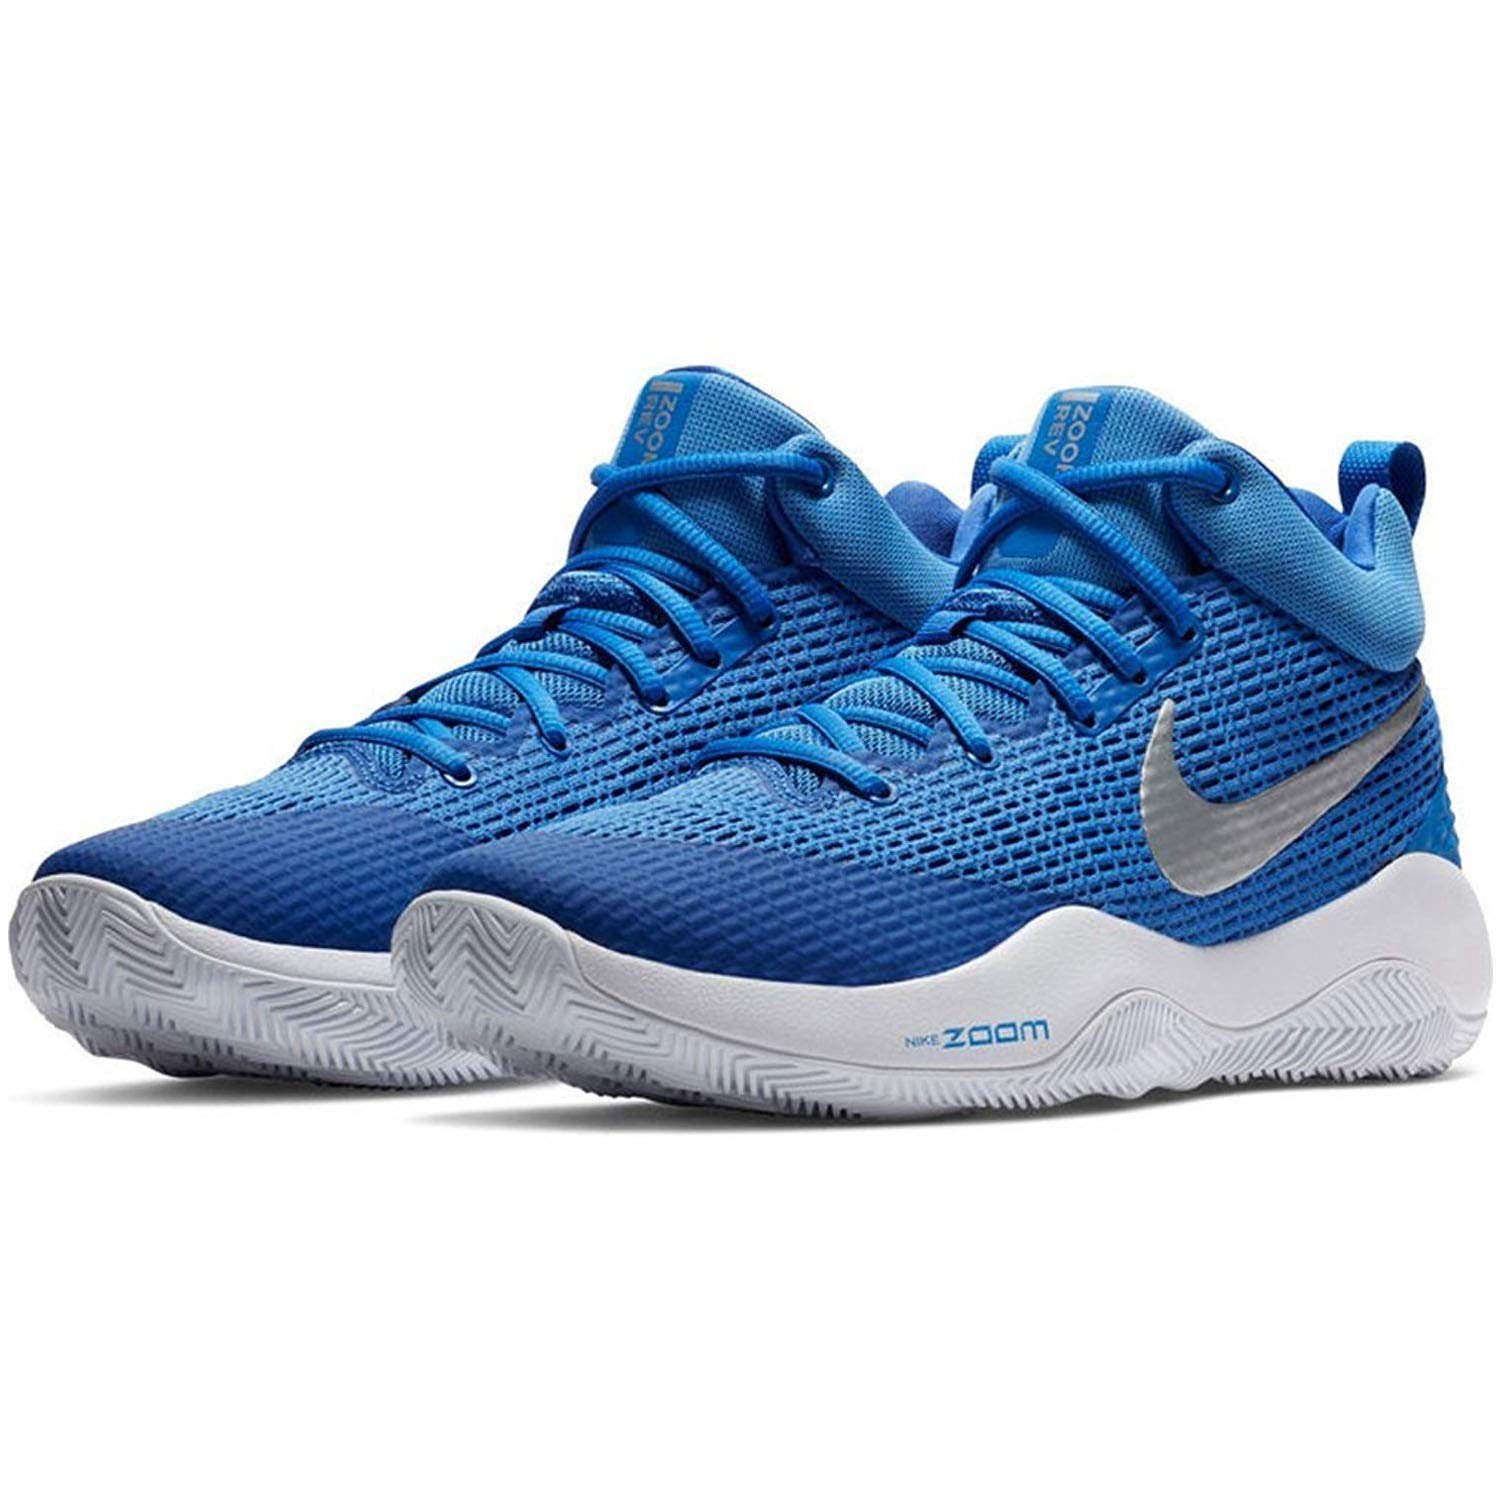 Nike Men's Zoom REV TB Basketball Shoes | eBay